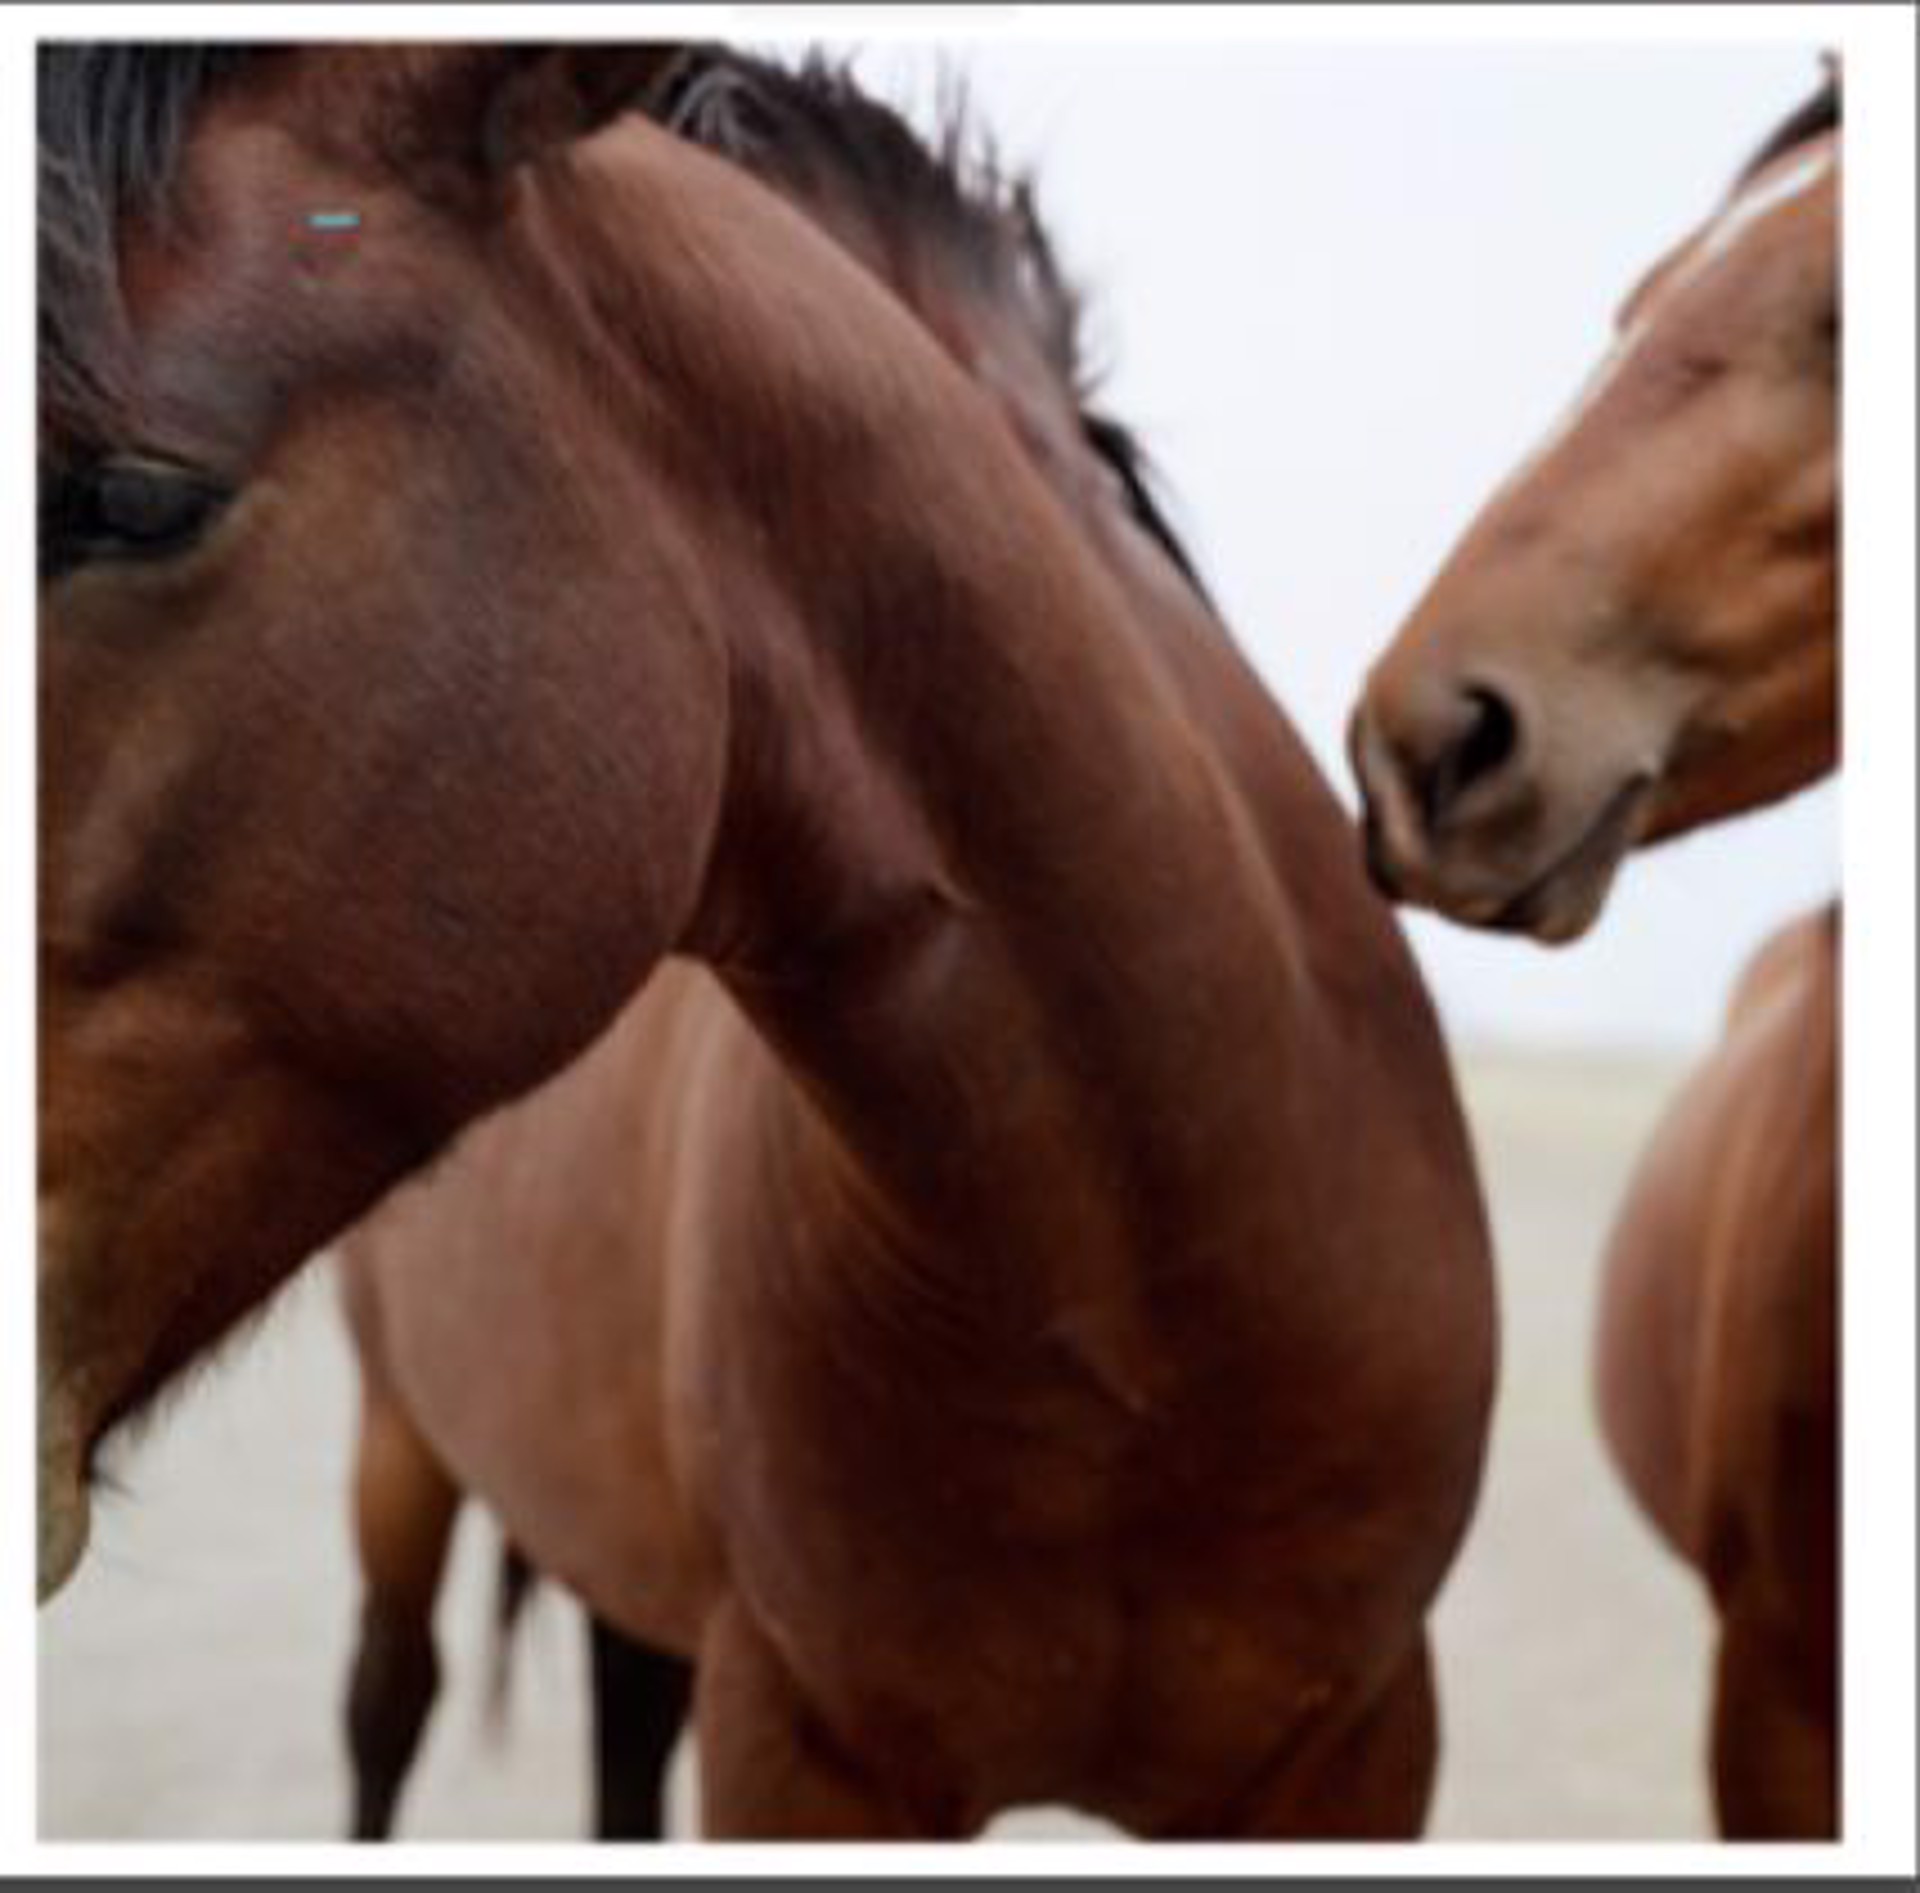 Tigie's Horses, Marfa Texas by Allison V. Smith